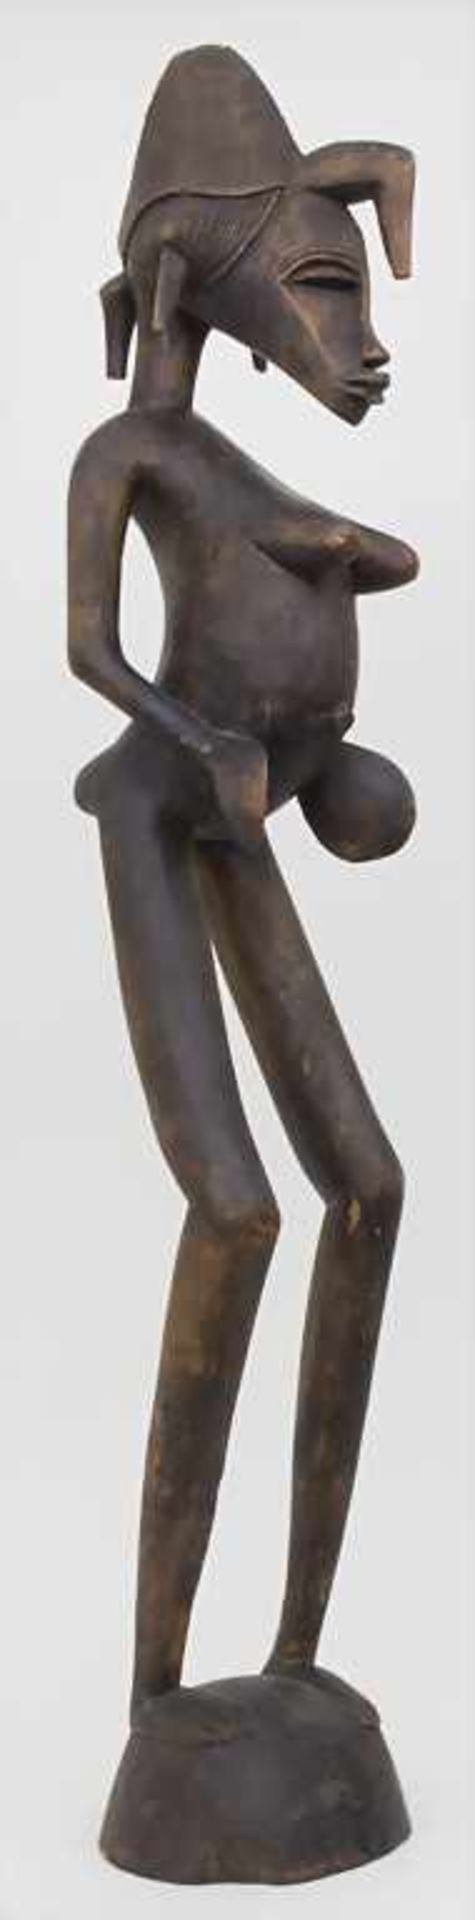 Weibliche Figur / A female figure, AfrikaMaterial: Holz, dunkelbraun patiniert,Höhe: 109 cm,Zustand: